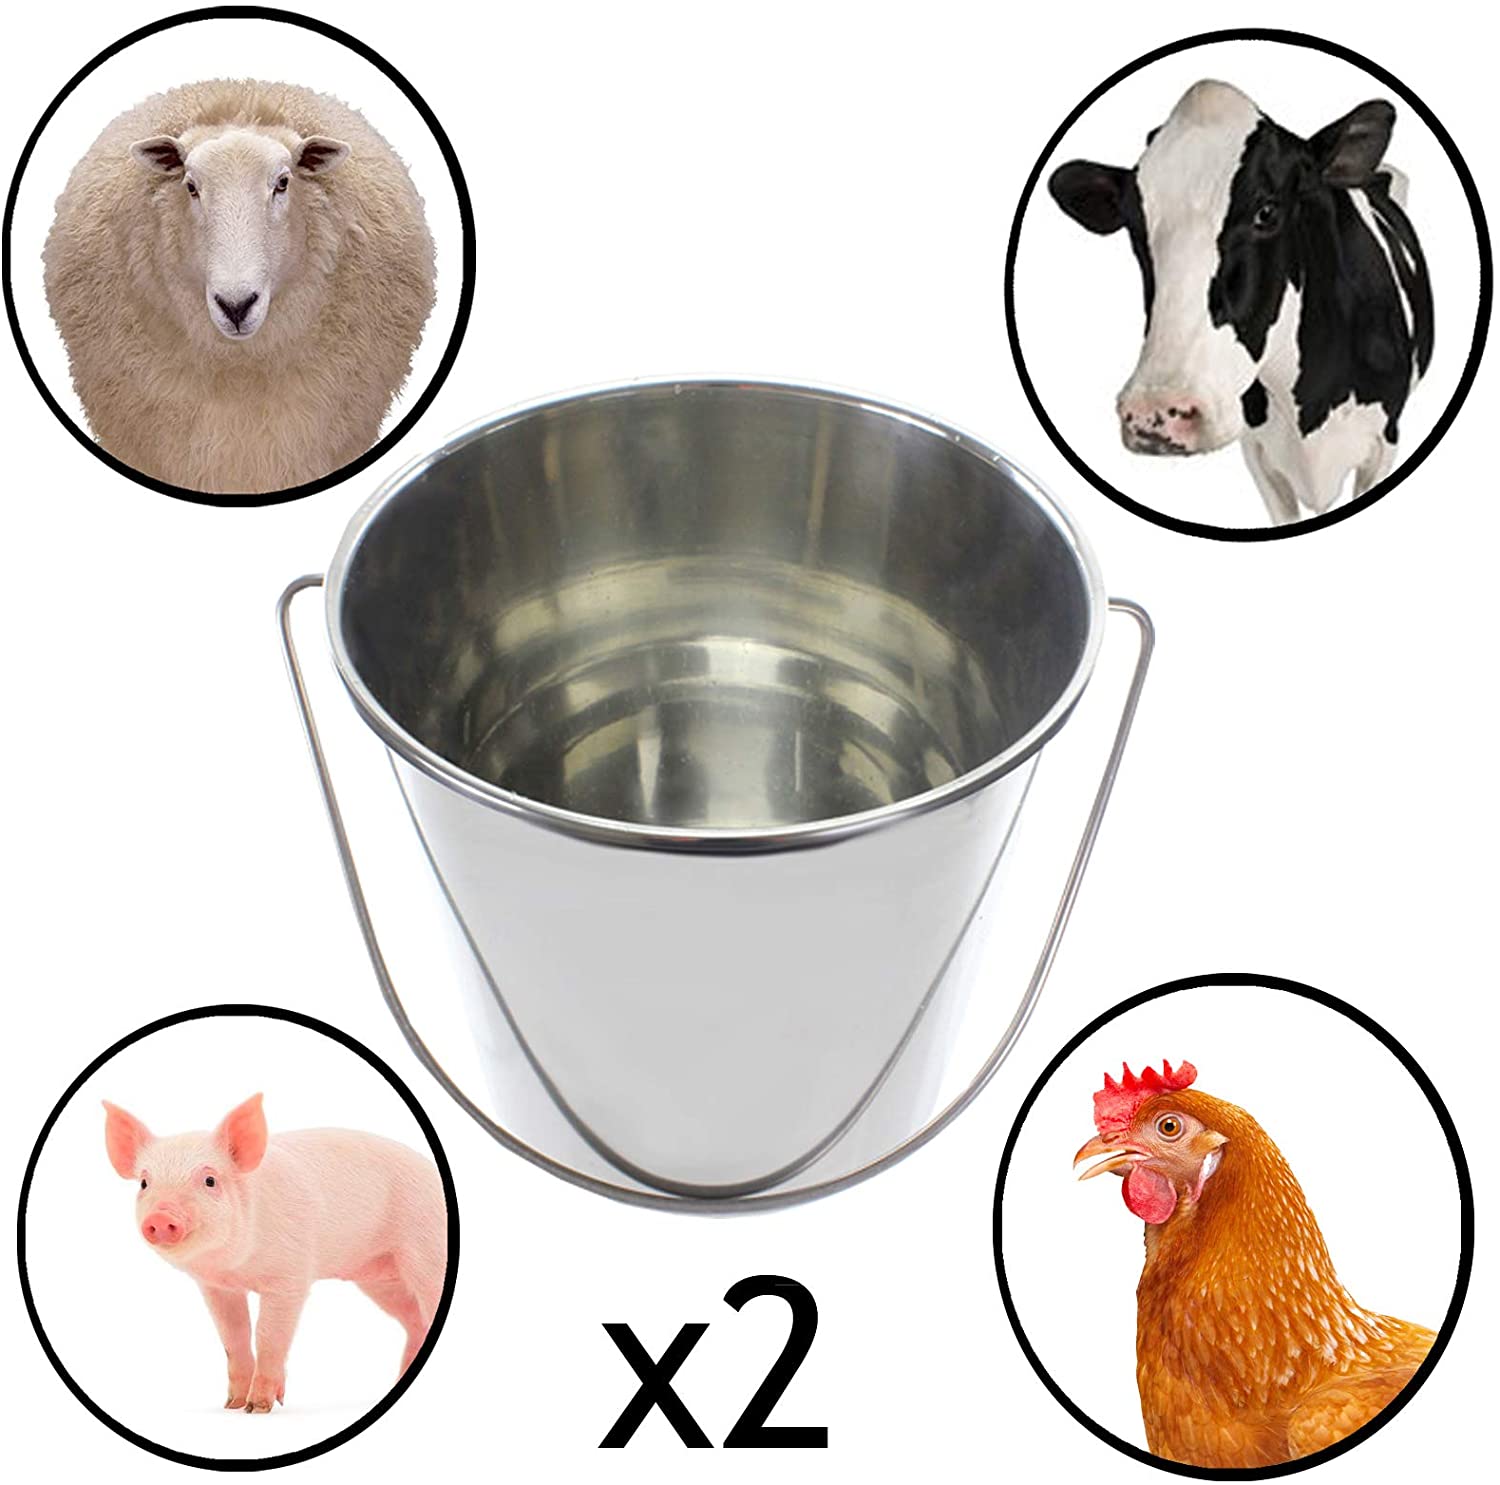 Water Bucket, 2 Buckets for Farm Animal, Cattle Livestock Chickens